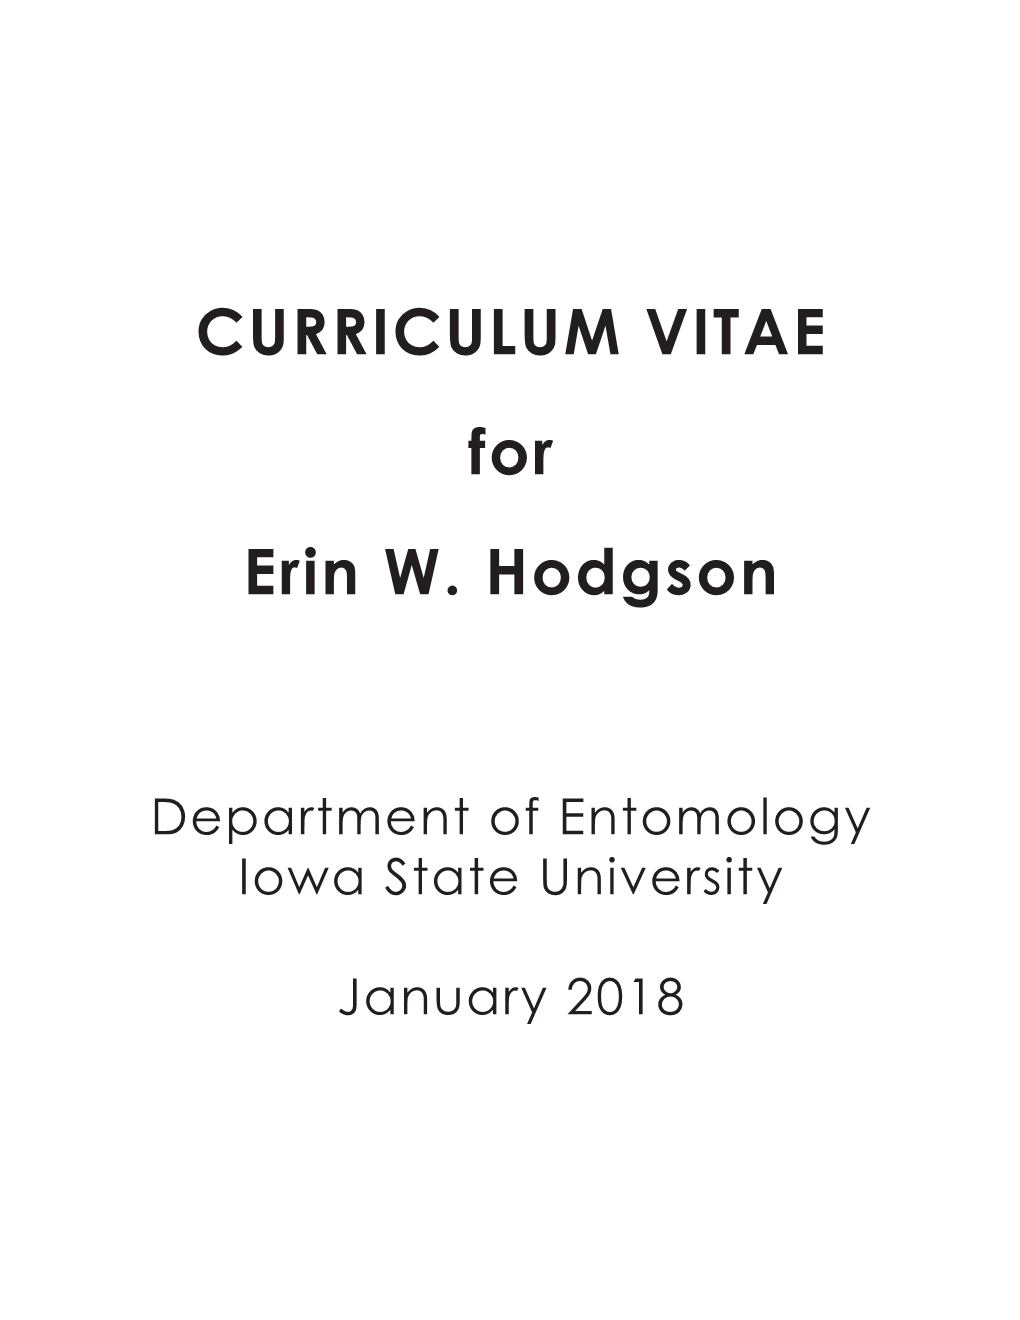 CURRICULUM VITAE for Erin W. Hodgson